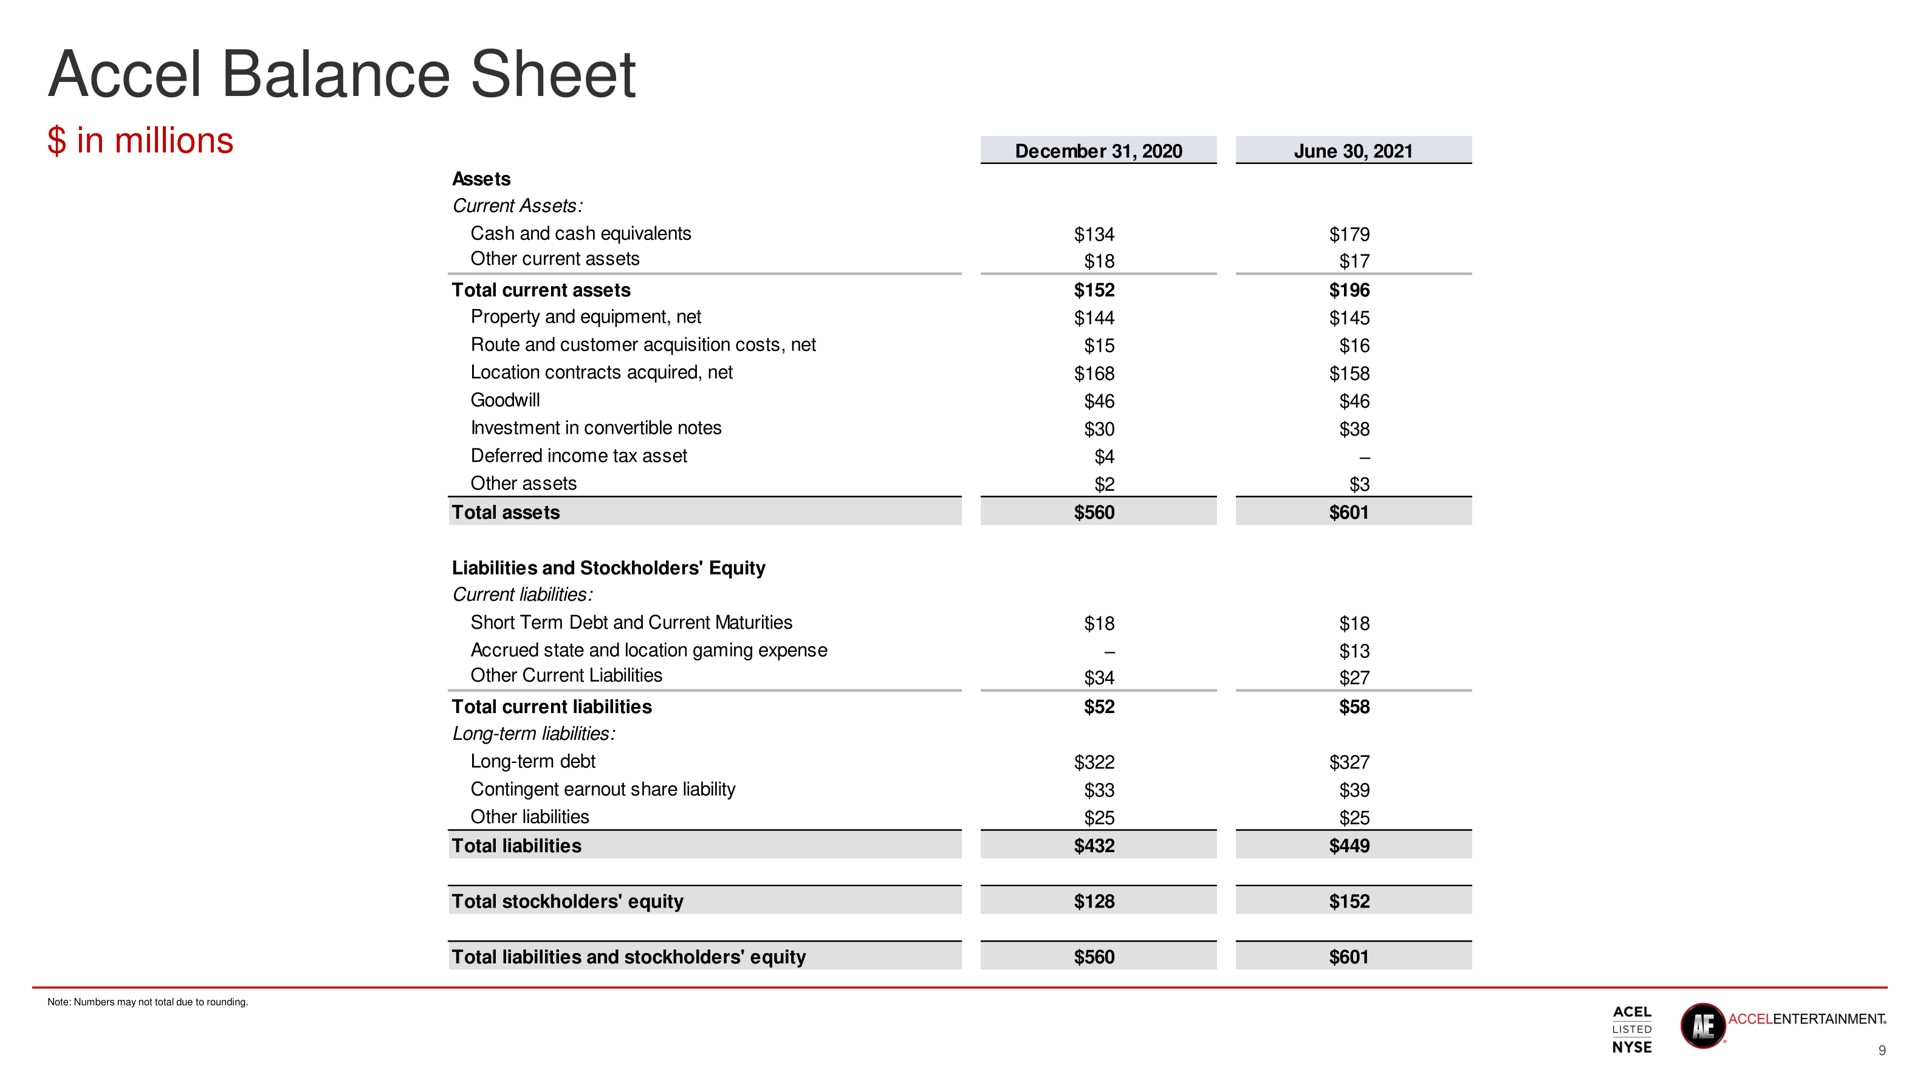 balance sheet in millions | Accel Entertaiment